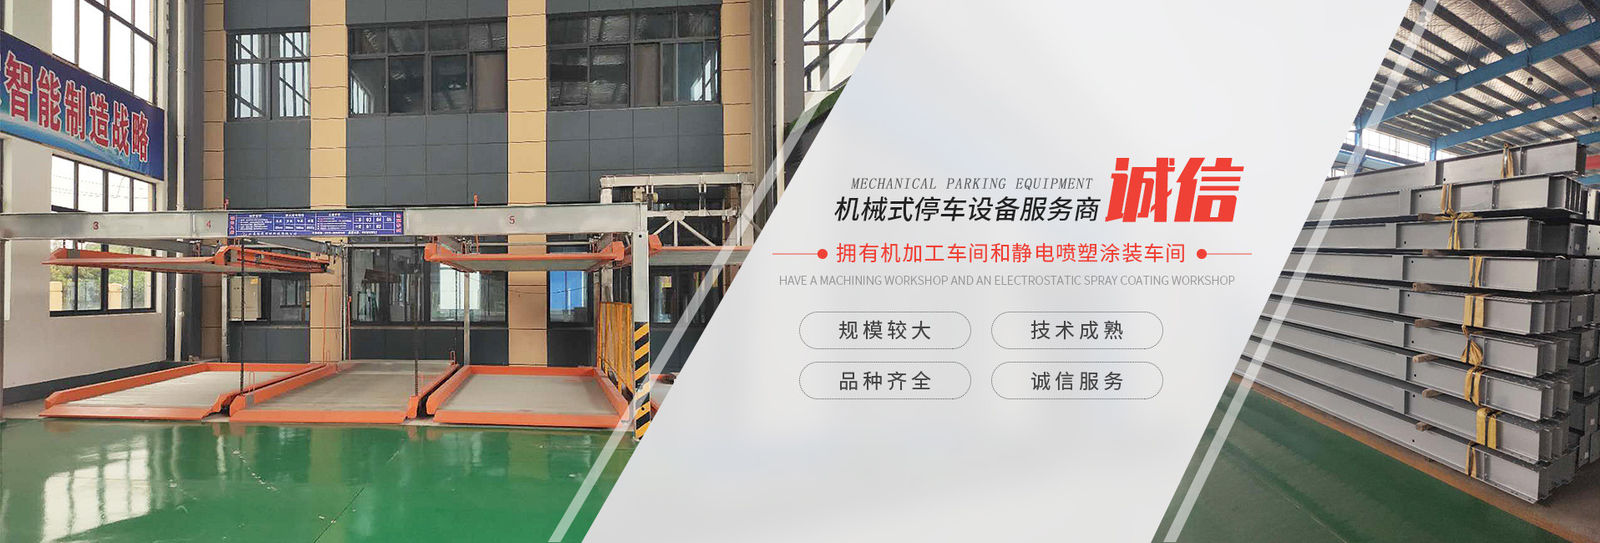 中国 Shanghai Changyue Automation Machinery Co., Ltd. 会社概要